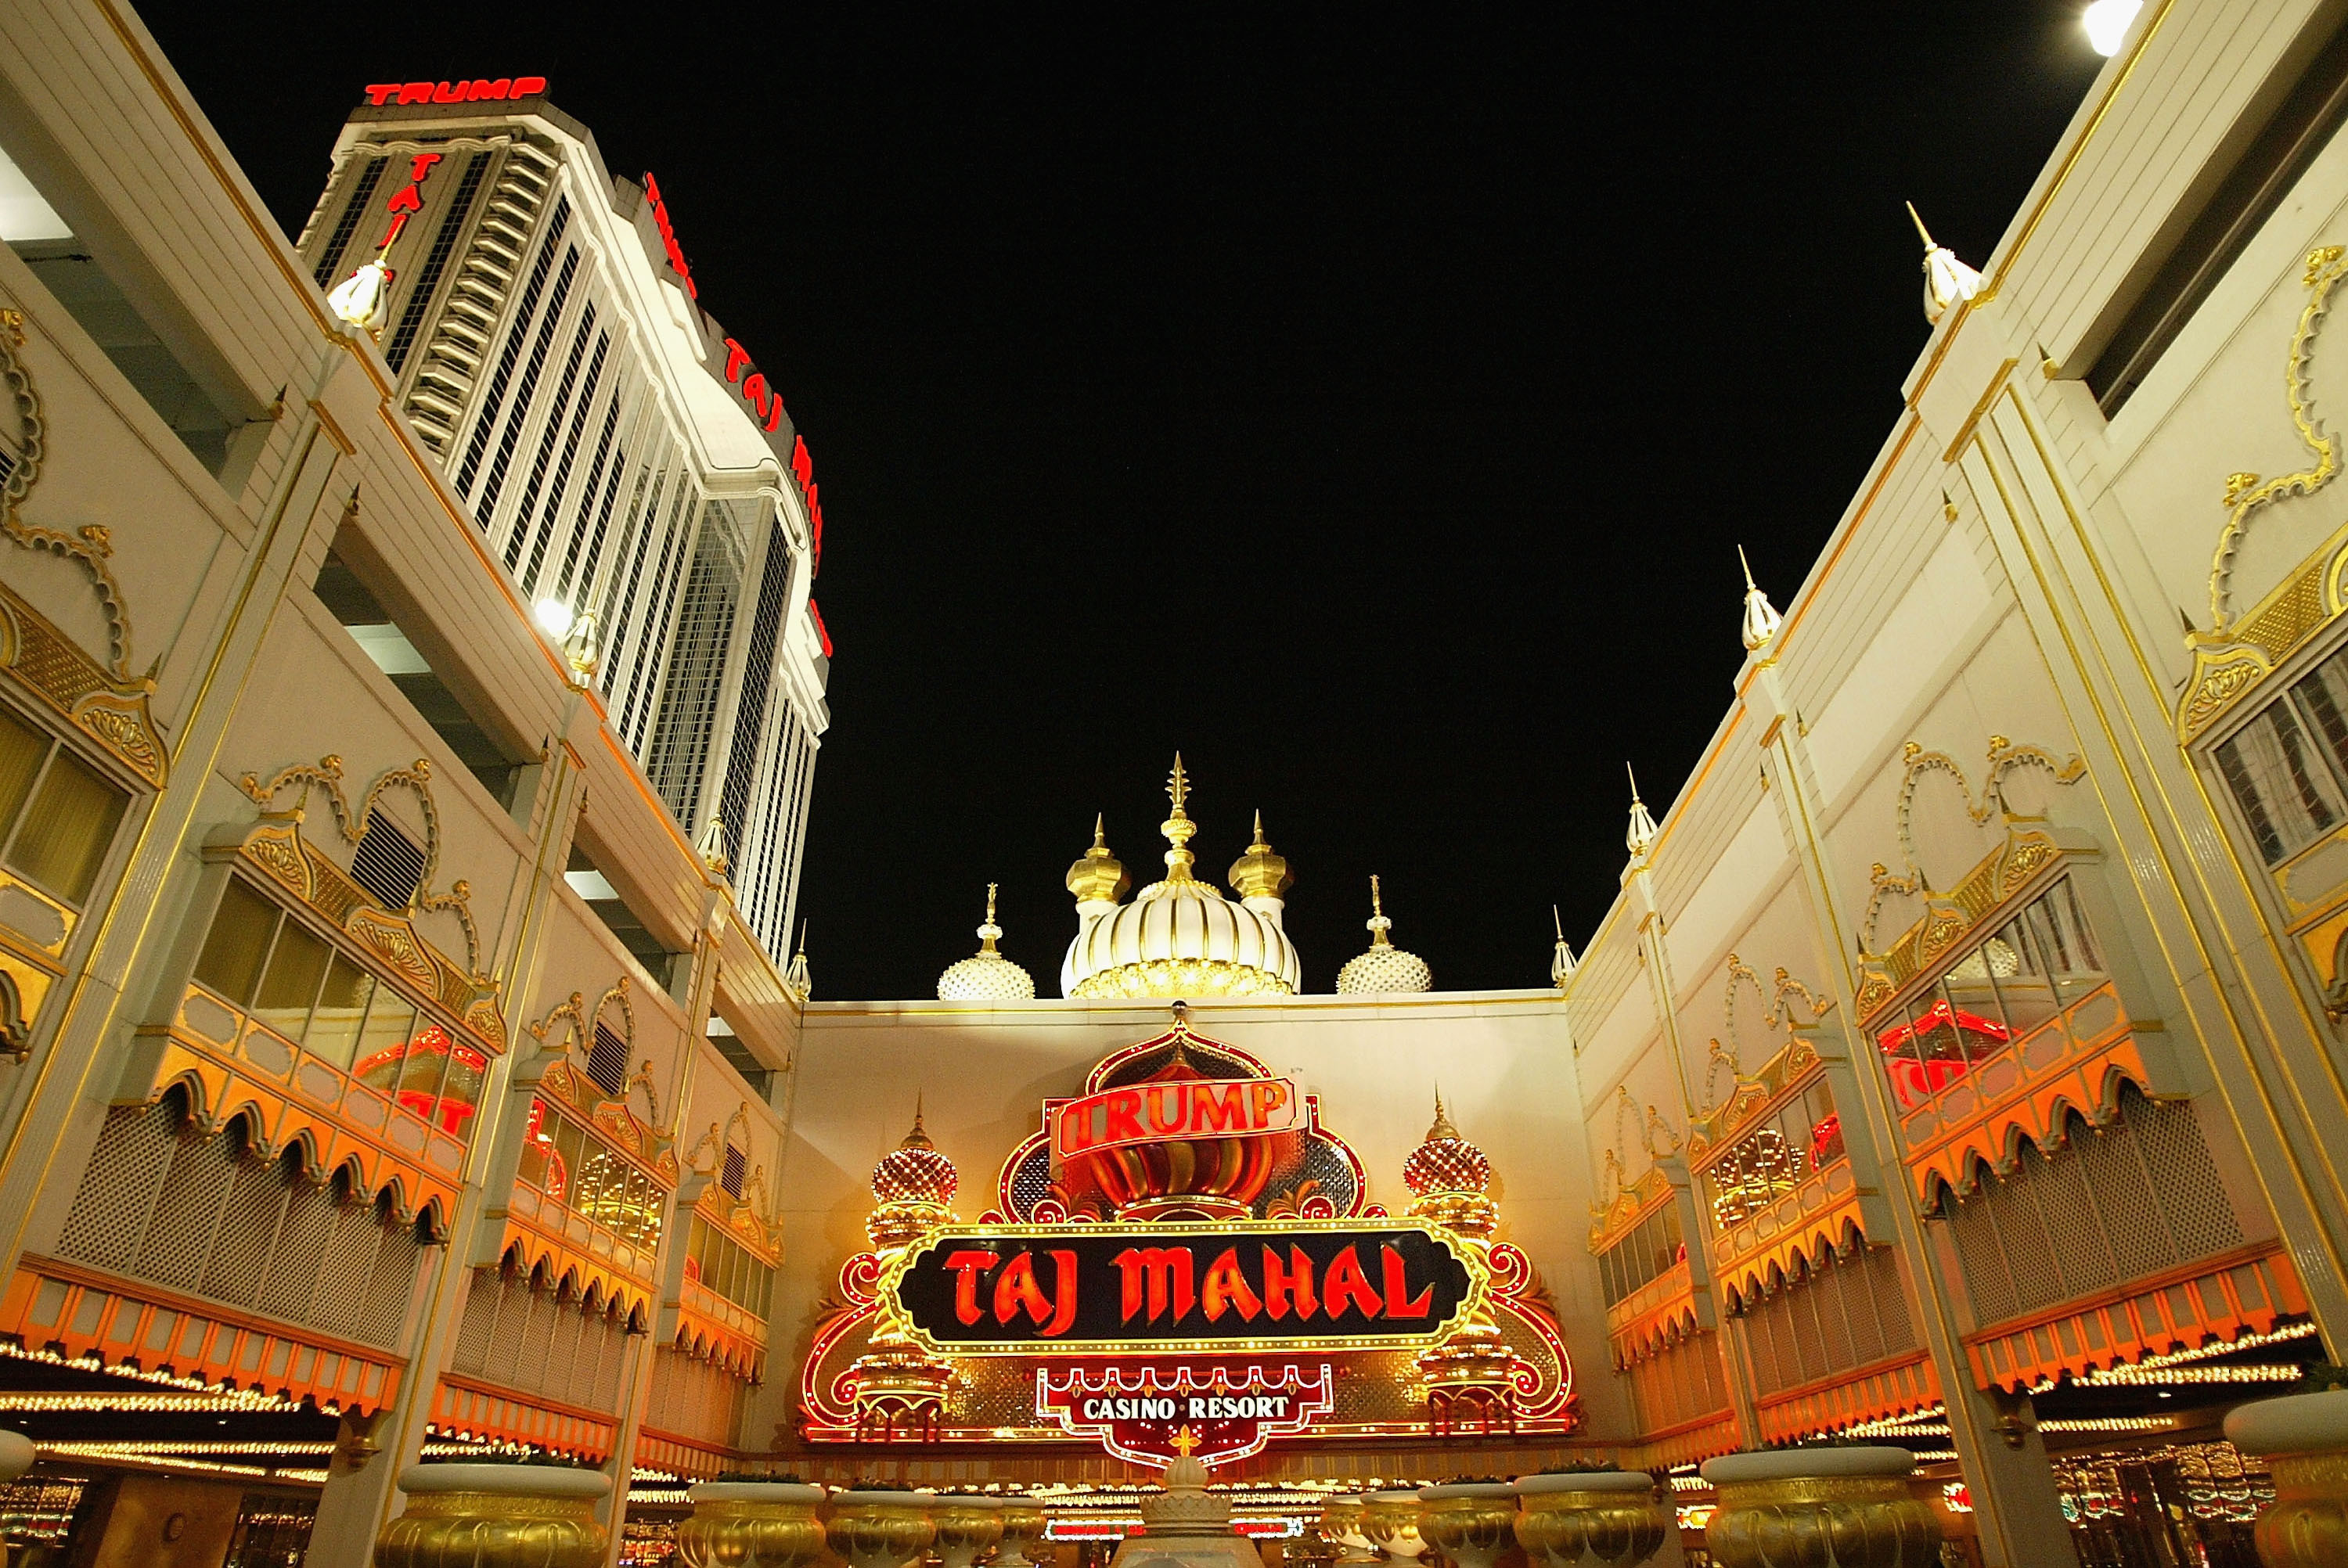 Taj Mahal Casino is closed, Atlantic City mourns